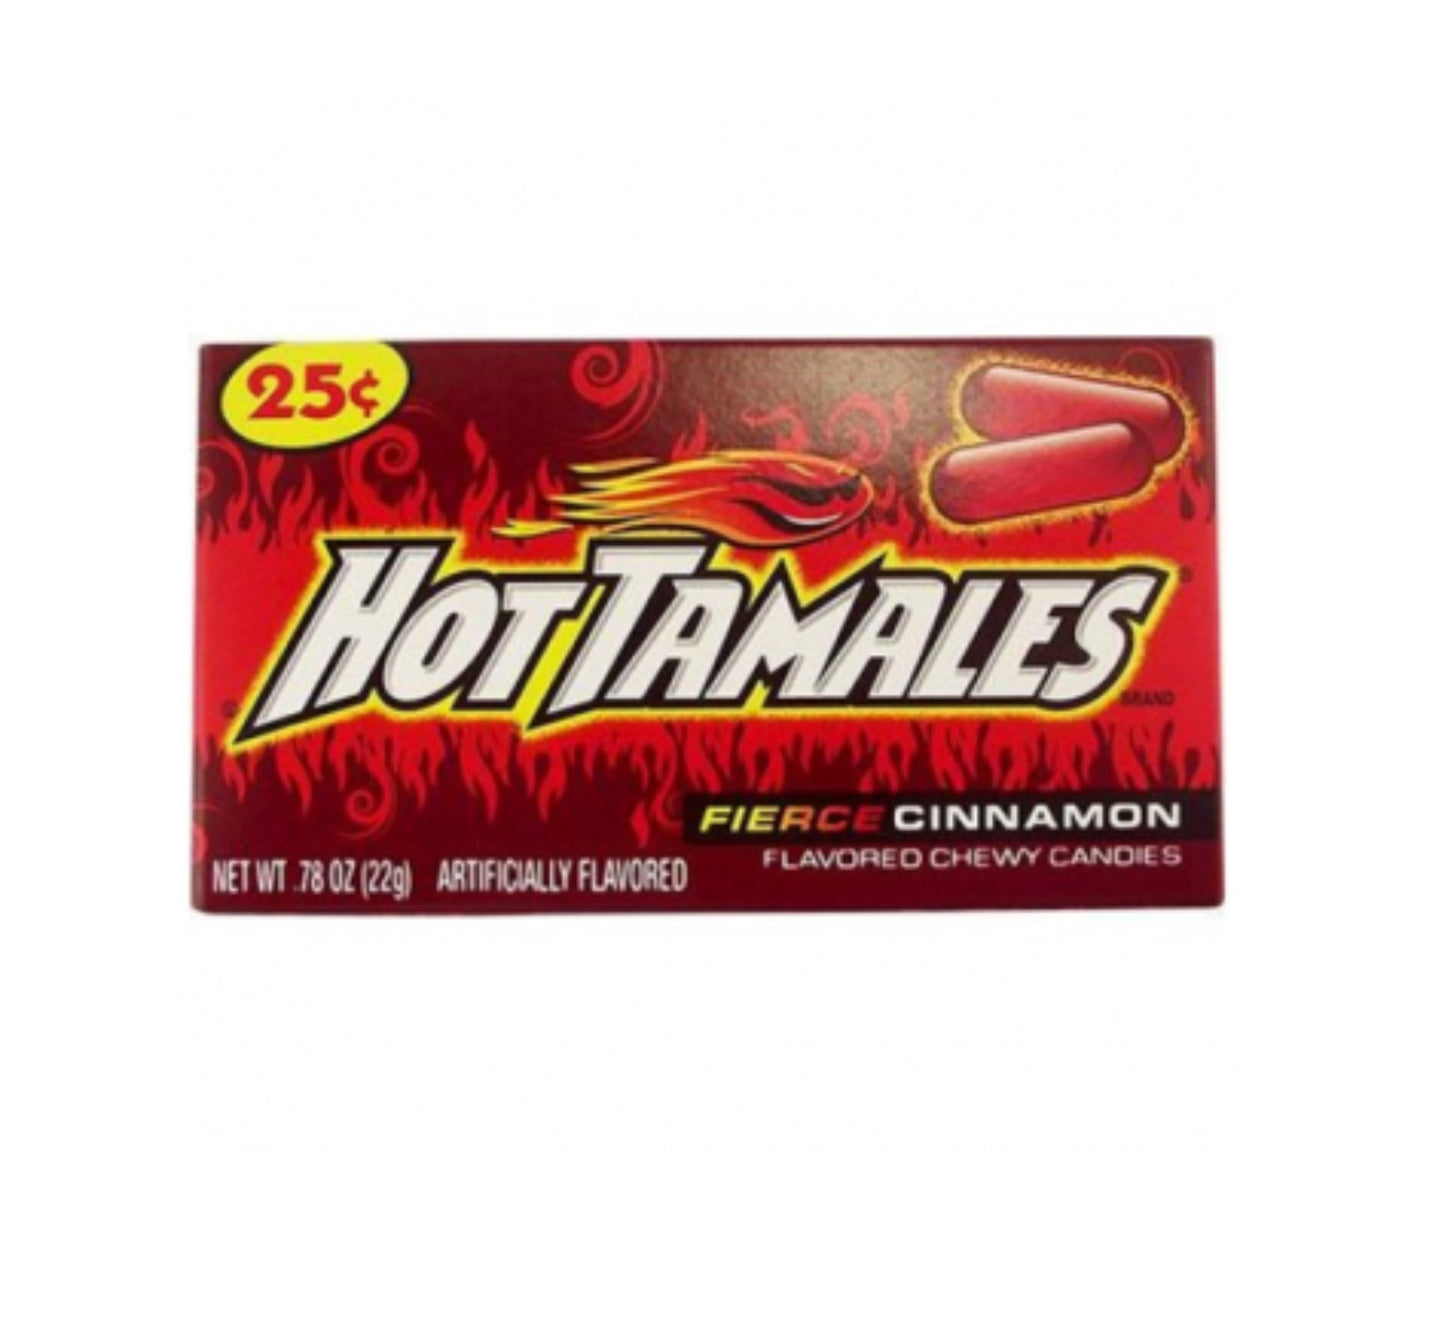 Hot Tamales Fierce Cinnamon - 22g  Box of 24